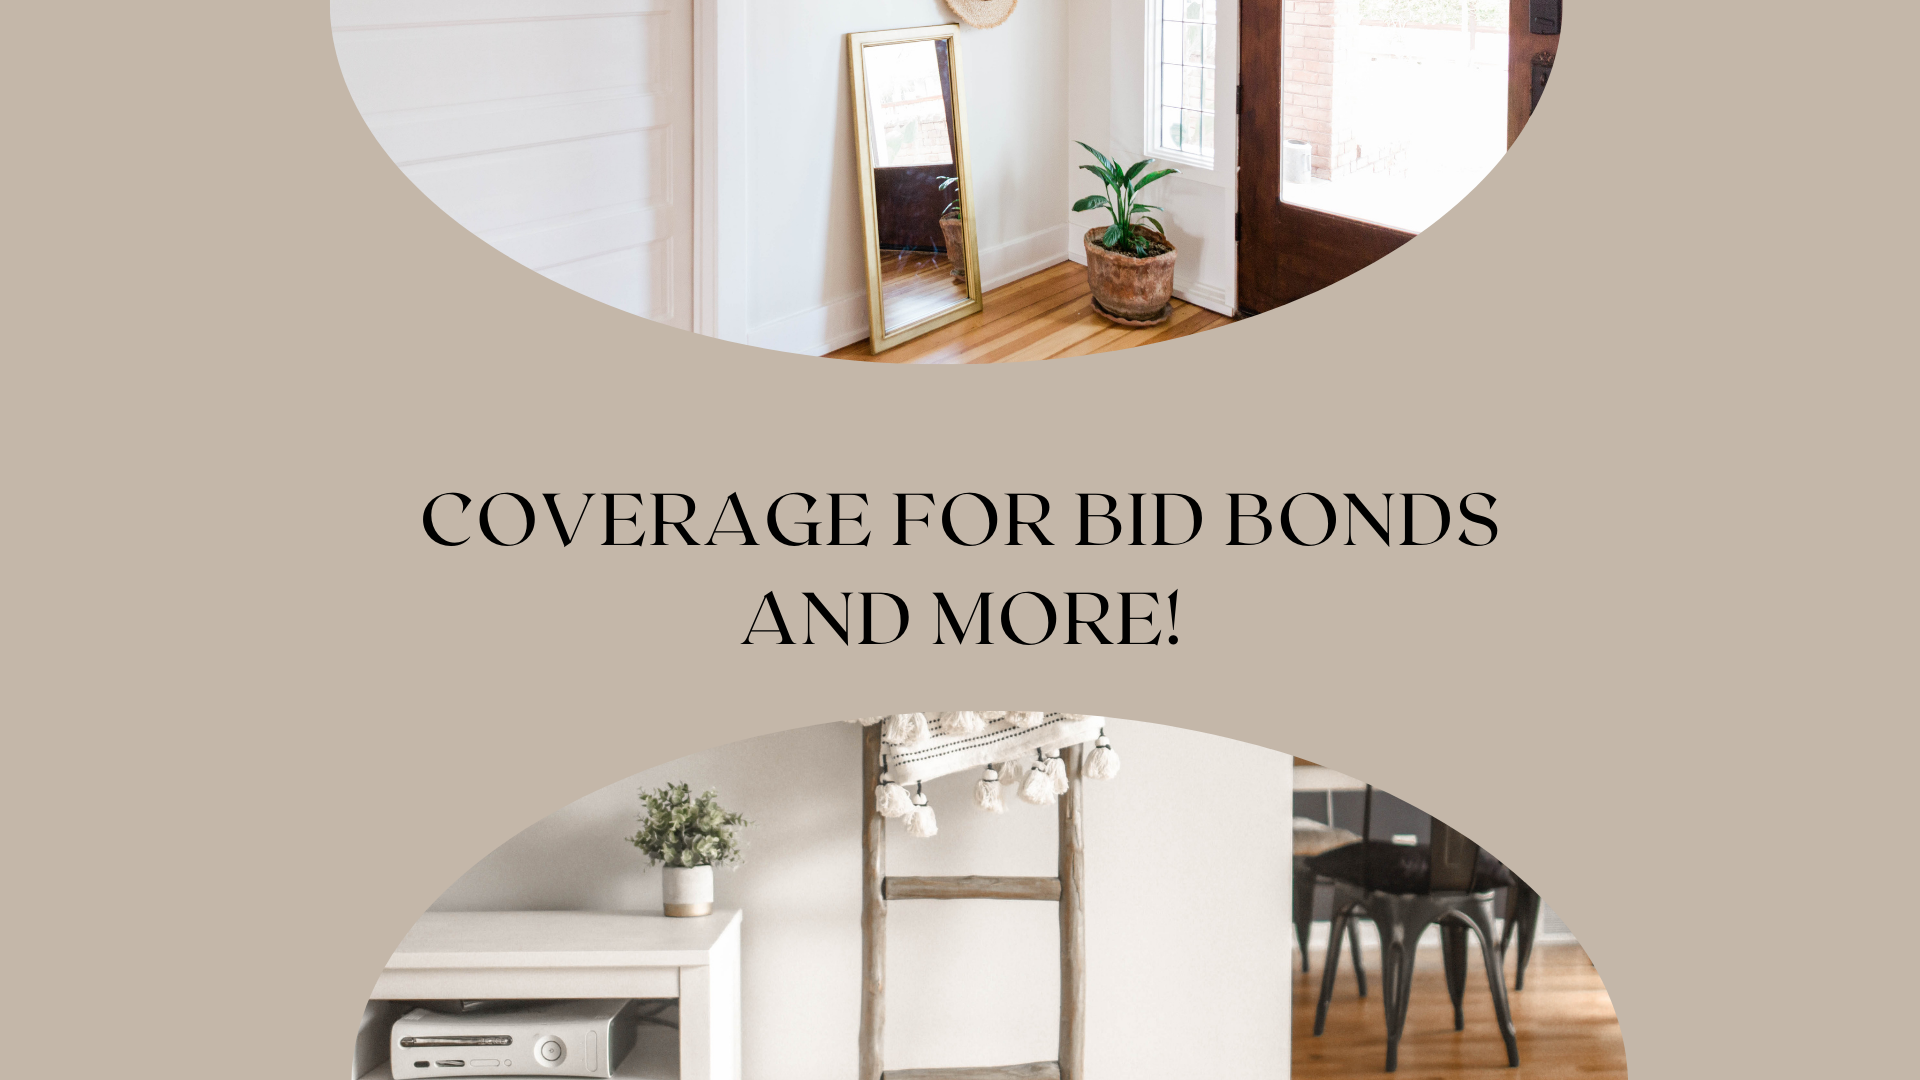 bid bonds - What does a bid bond cover - minimalism